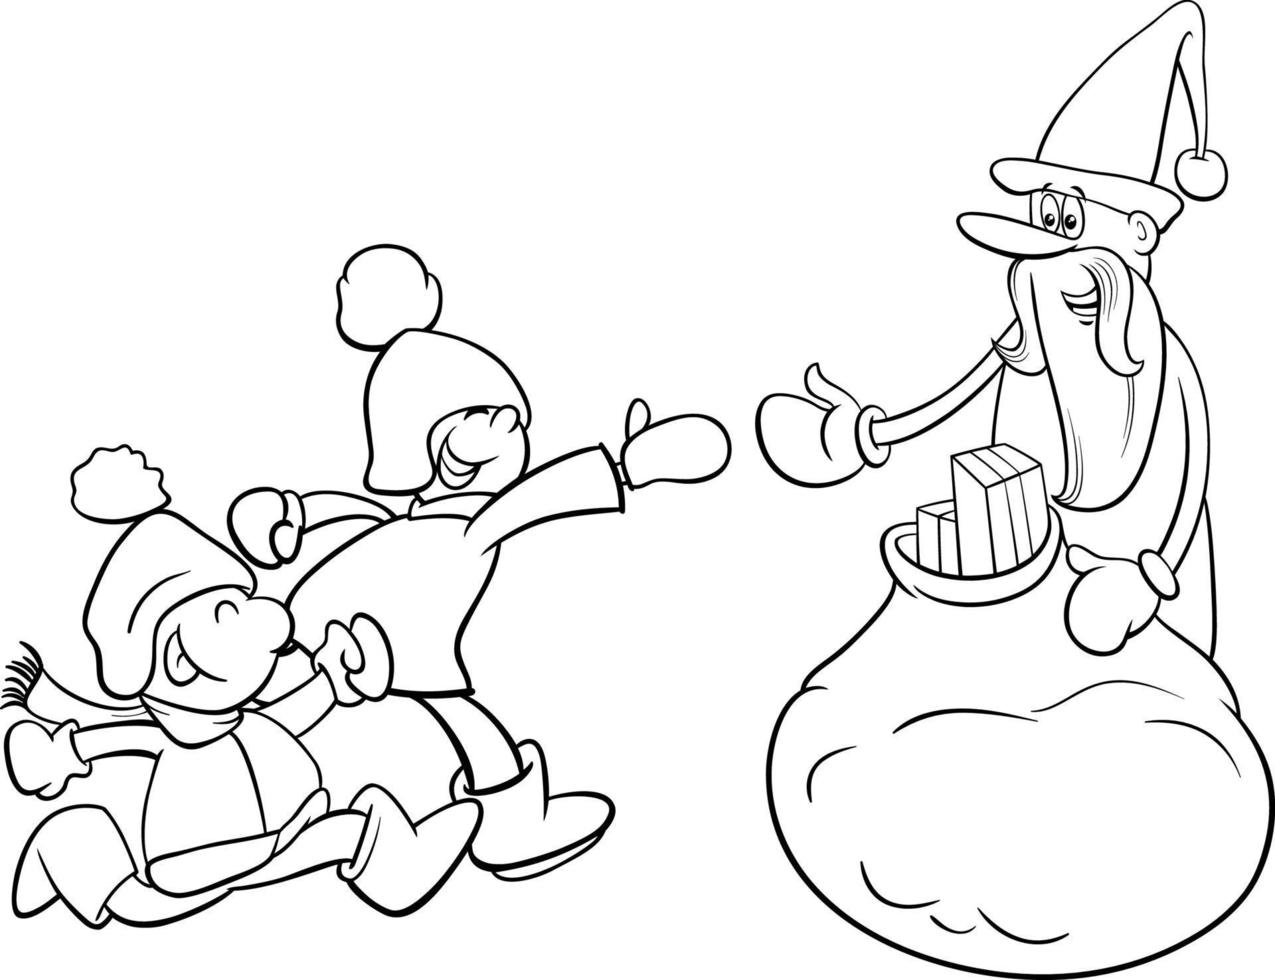 cartoon Santa Claus giving Christmas gifts to kids coloring page vector